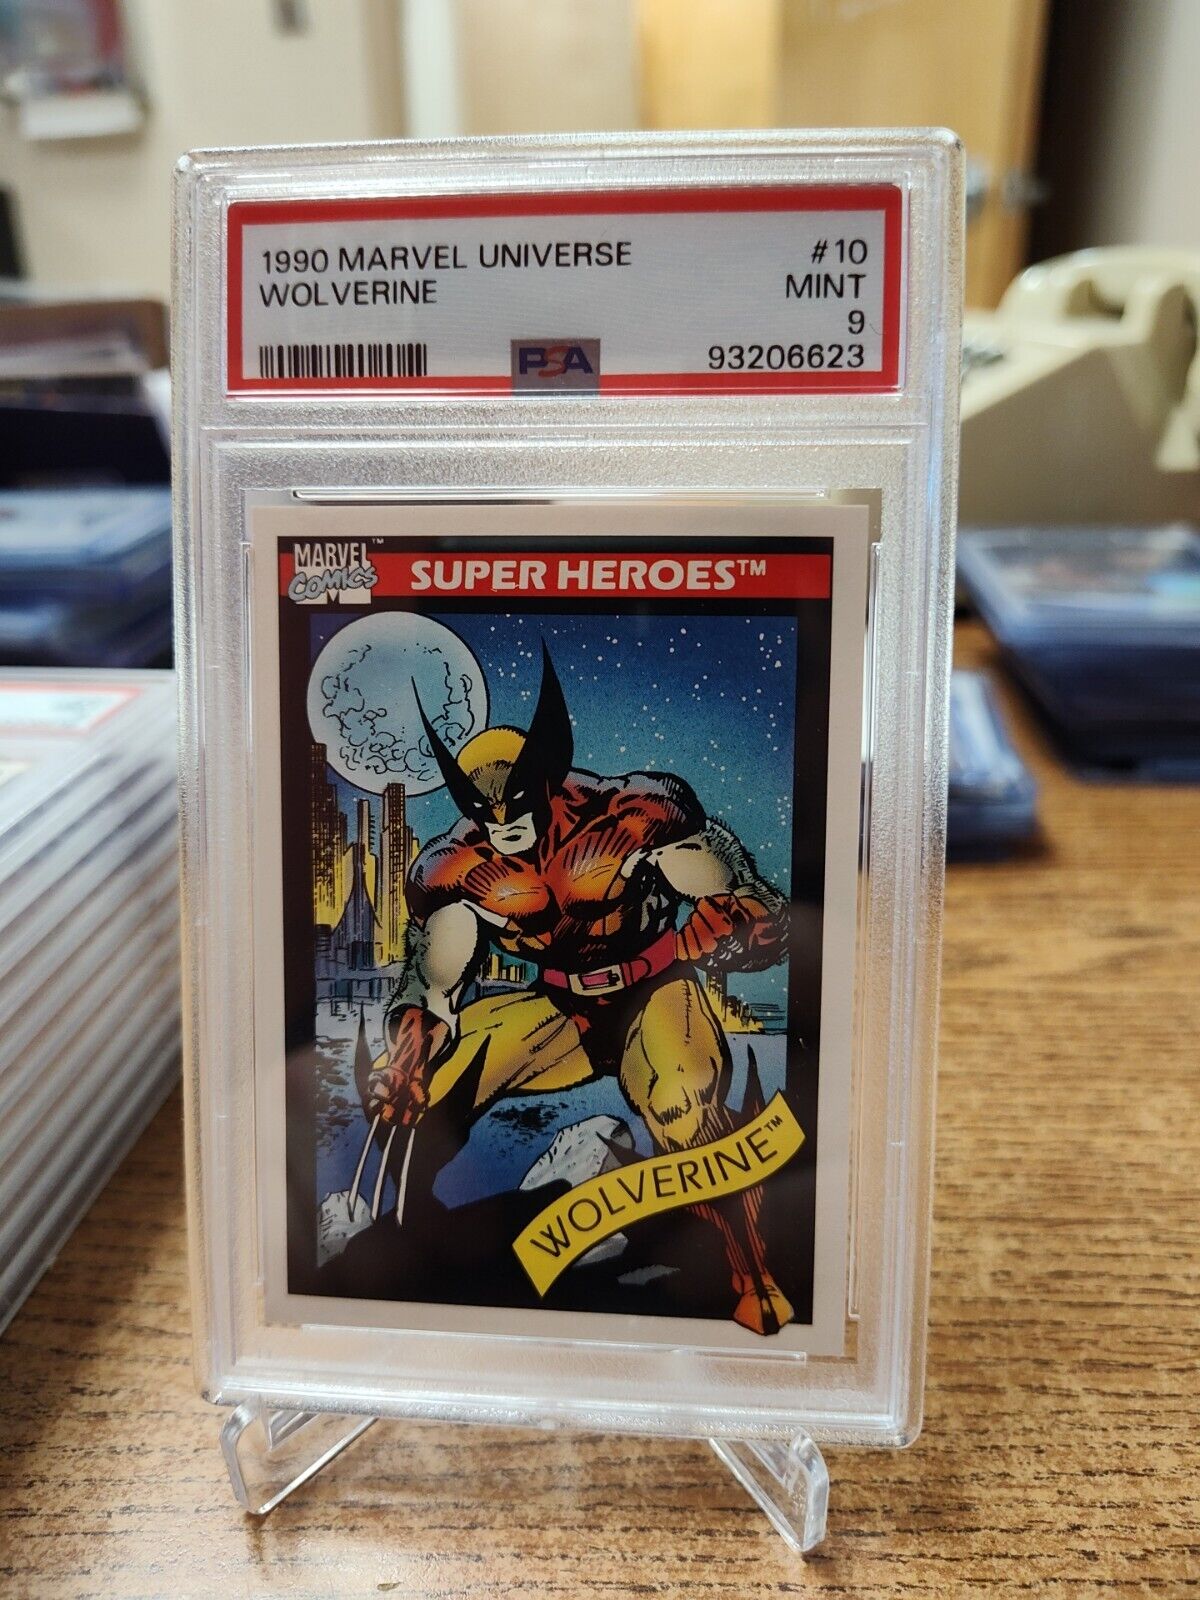 1990 Marvel Universe Wolverine #10 PSA 9 Mint